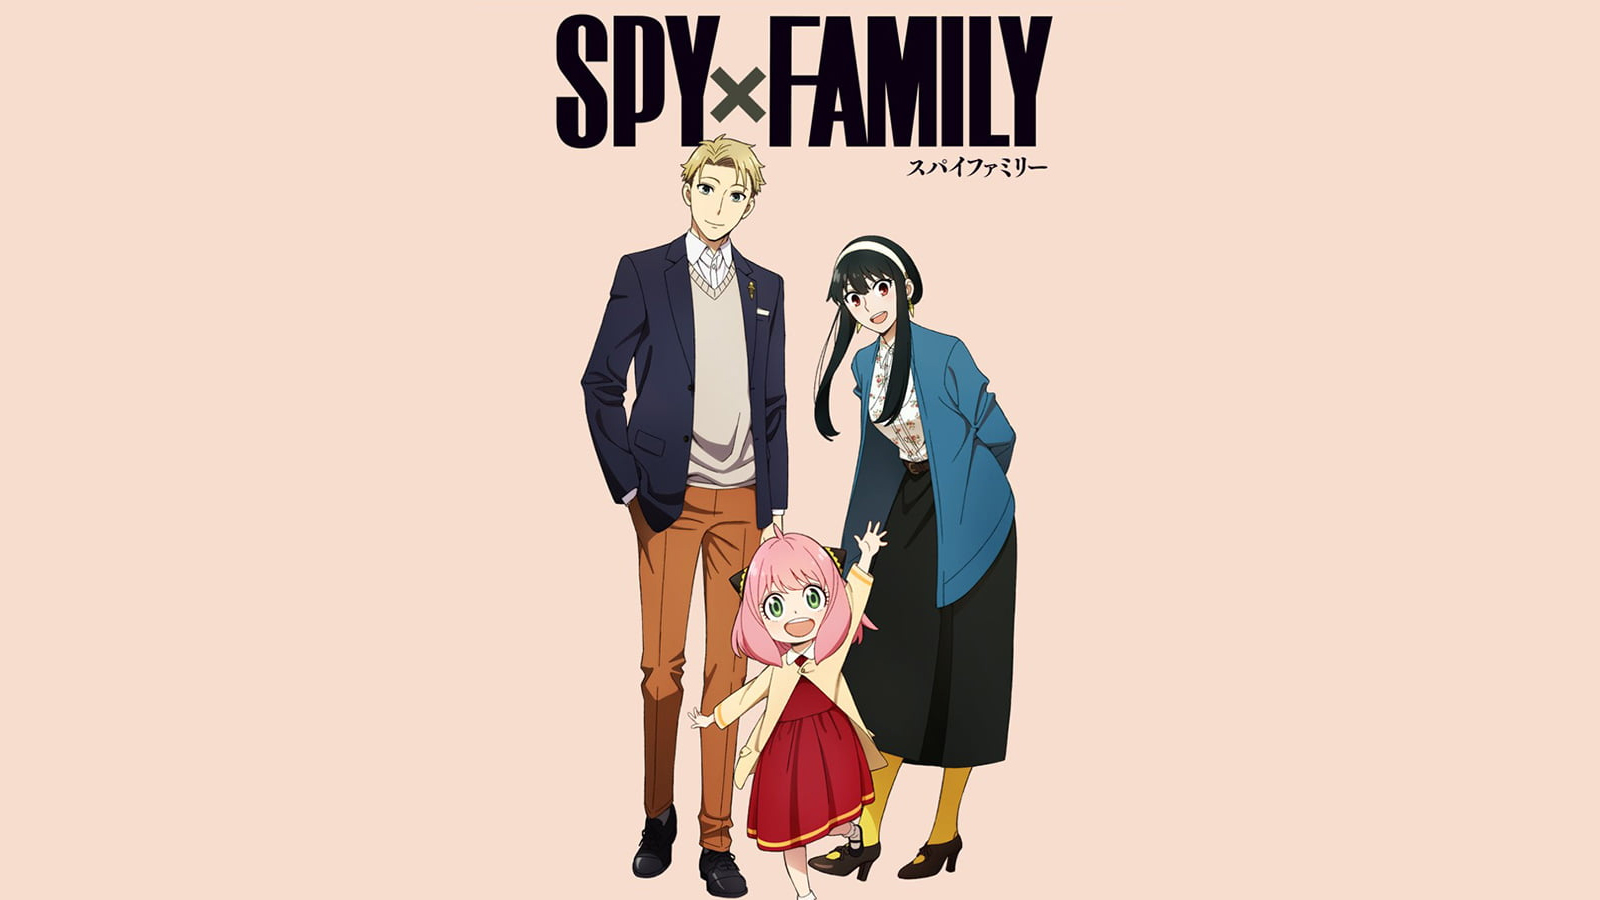 Spy x Family Season 2 - watch full episodes streaming online